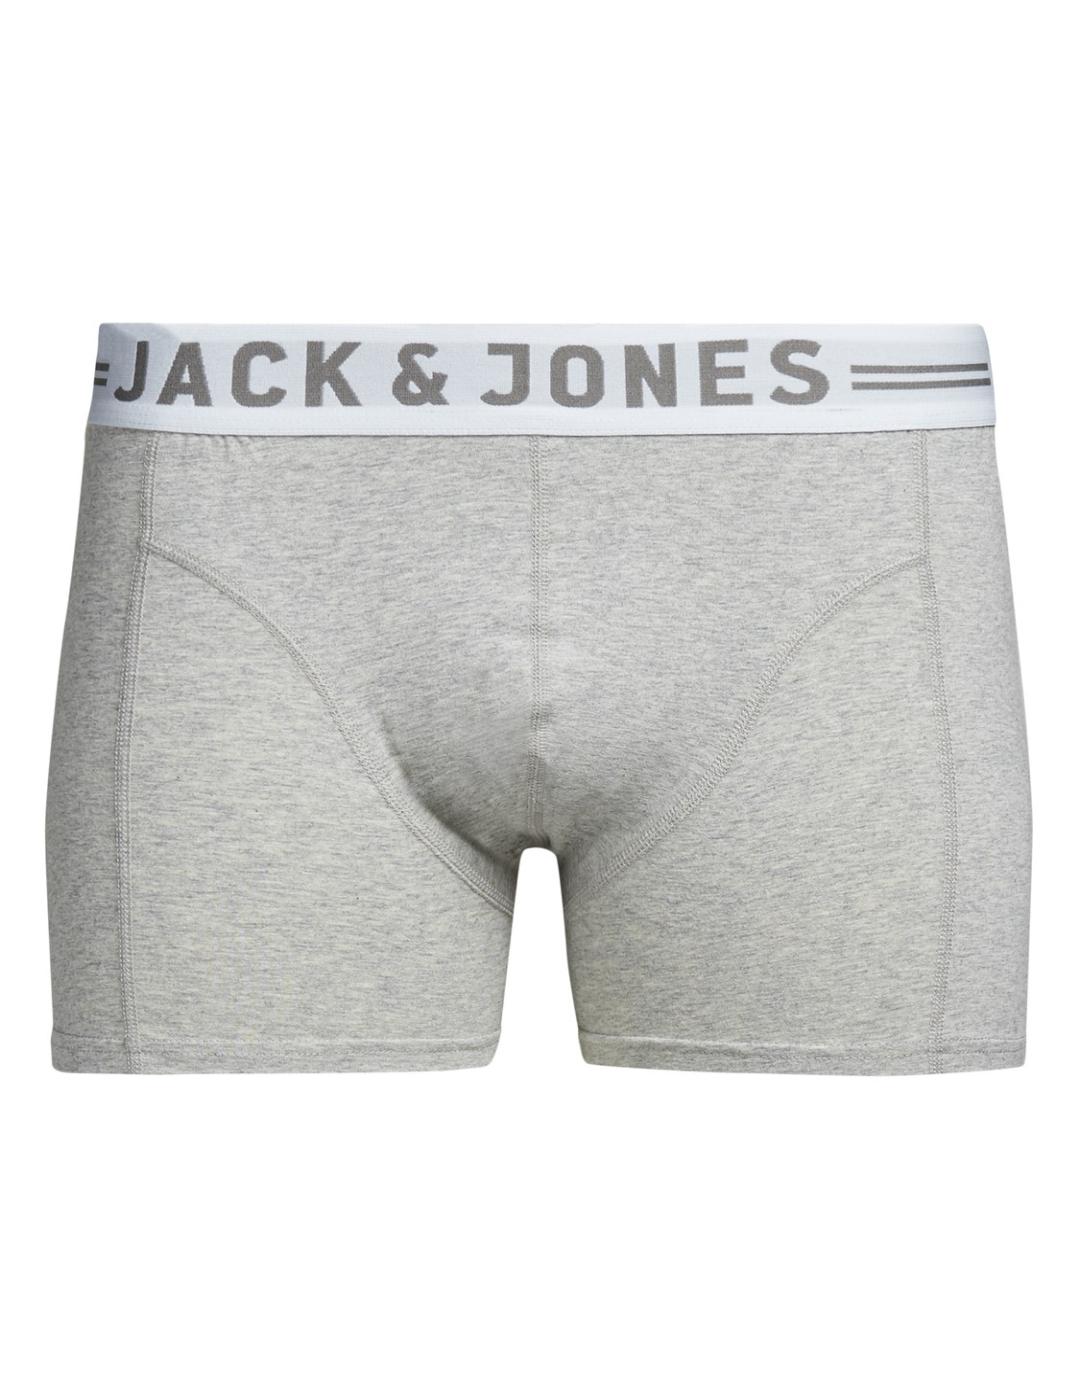 Intimo Jack&Jones Trunks Noos gris de hombre -j